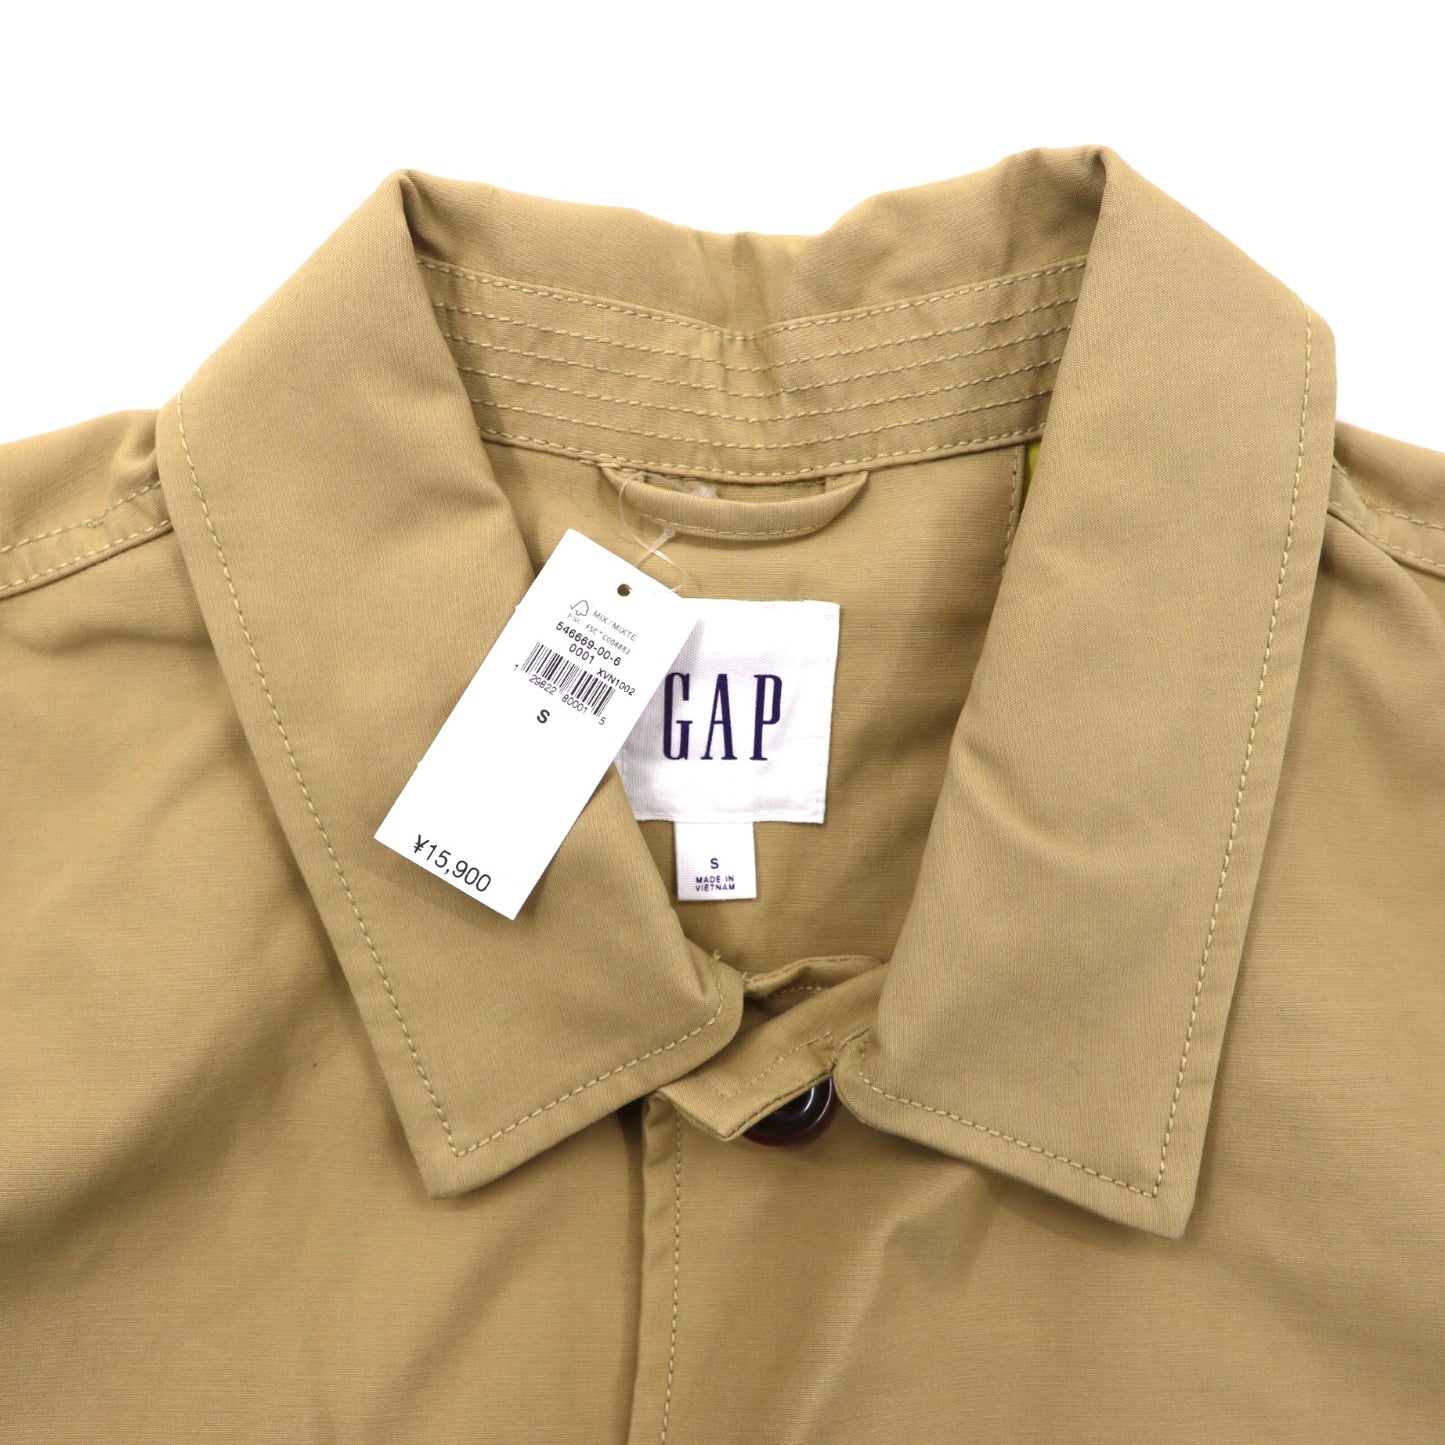 Gap men's ステンカラーコート Mサイズ - アウター